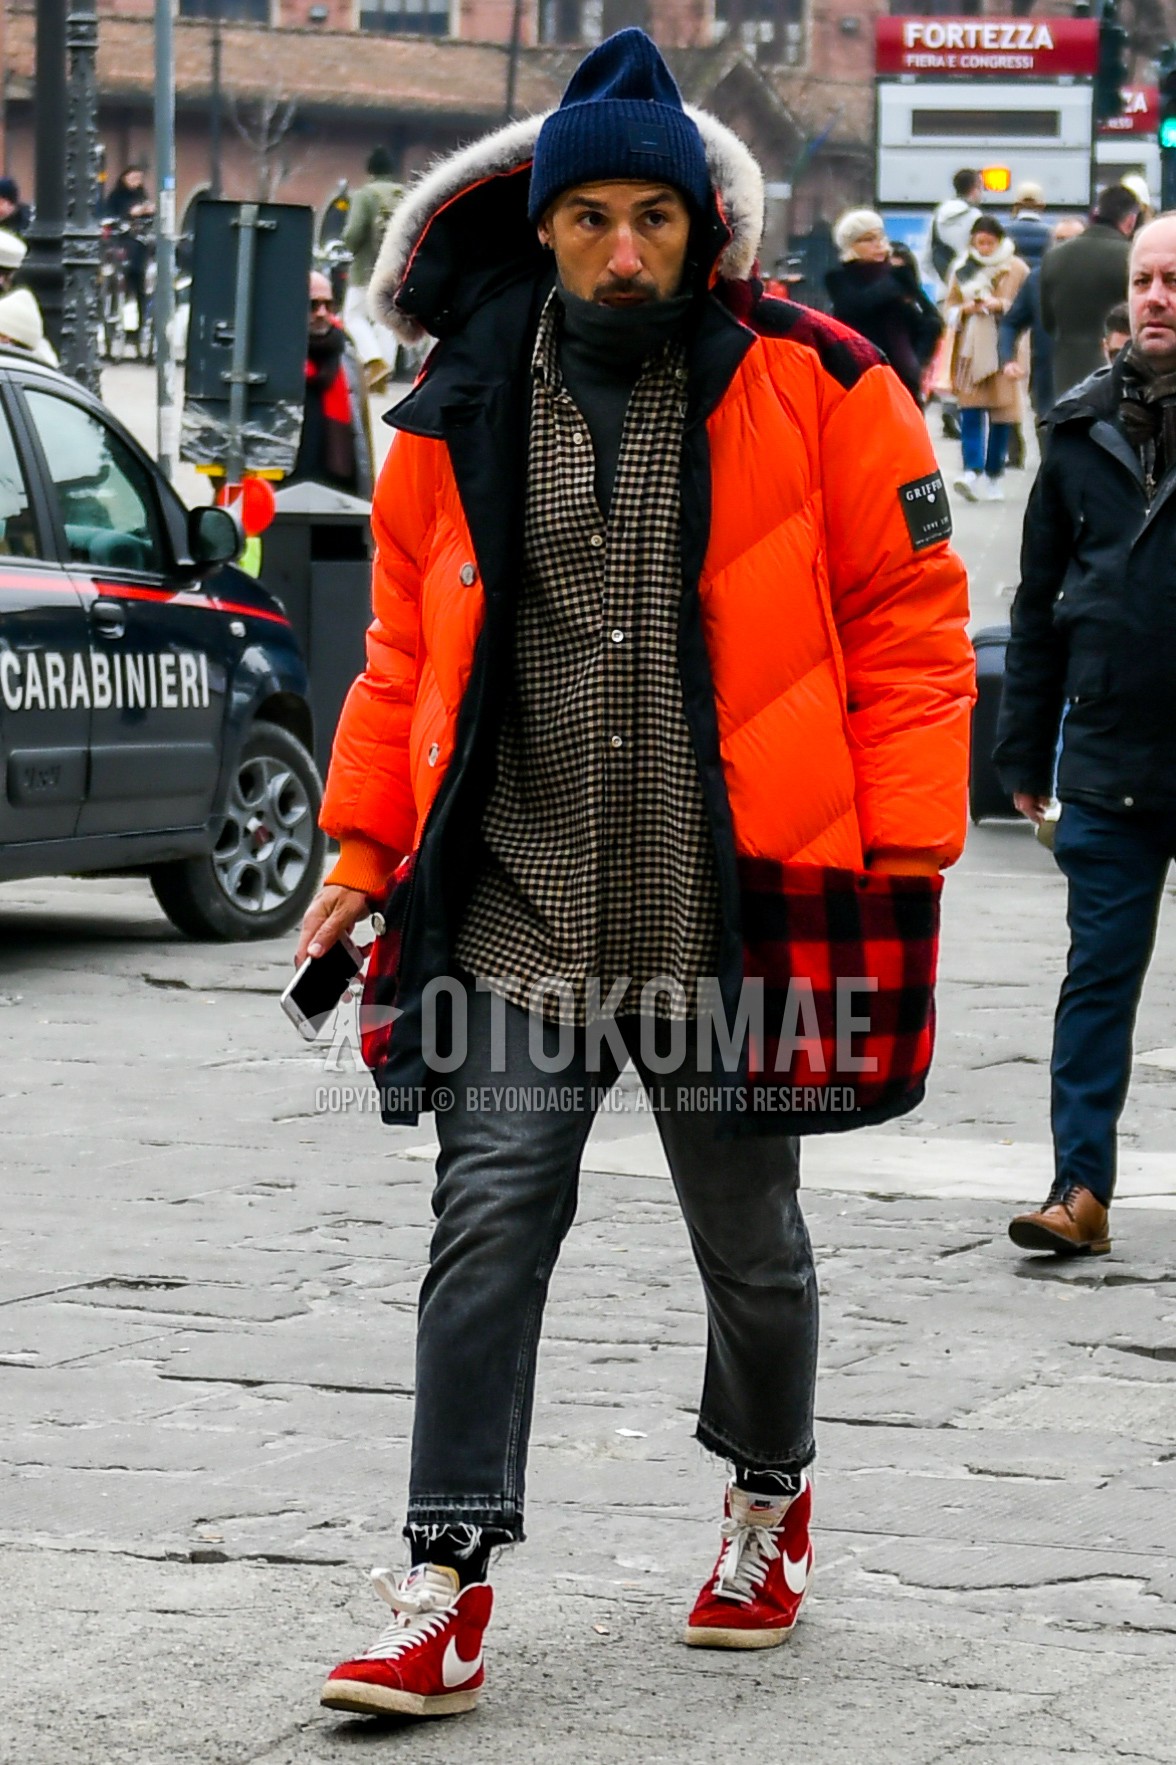 Men's winter outfit with navy plain knit cap, orange plain down jacket, black beige check shirt, gray plain turtleneck knit, gray plain denim/jeans, black plain socks, red high-cut sneakers.